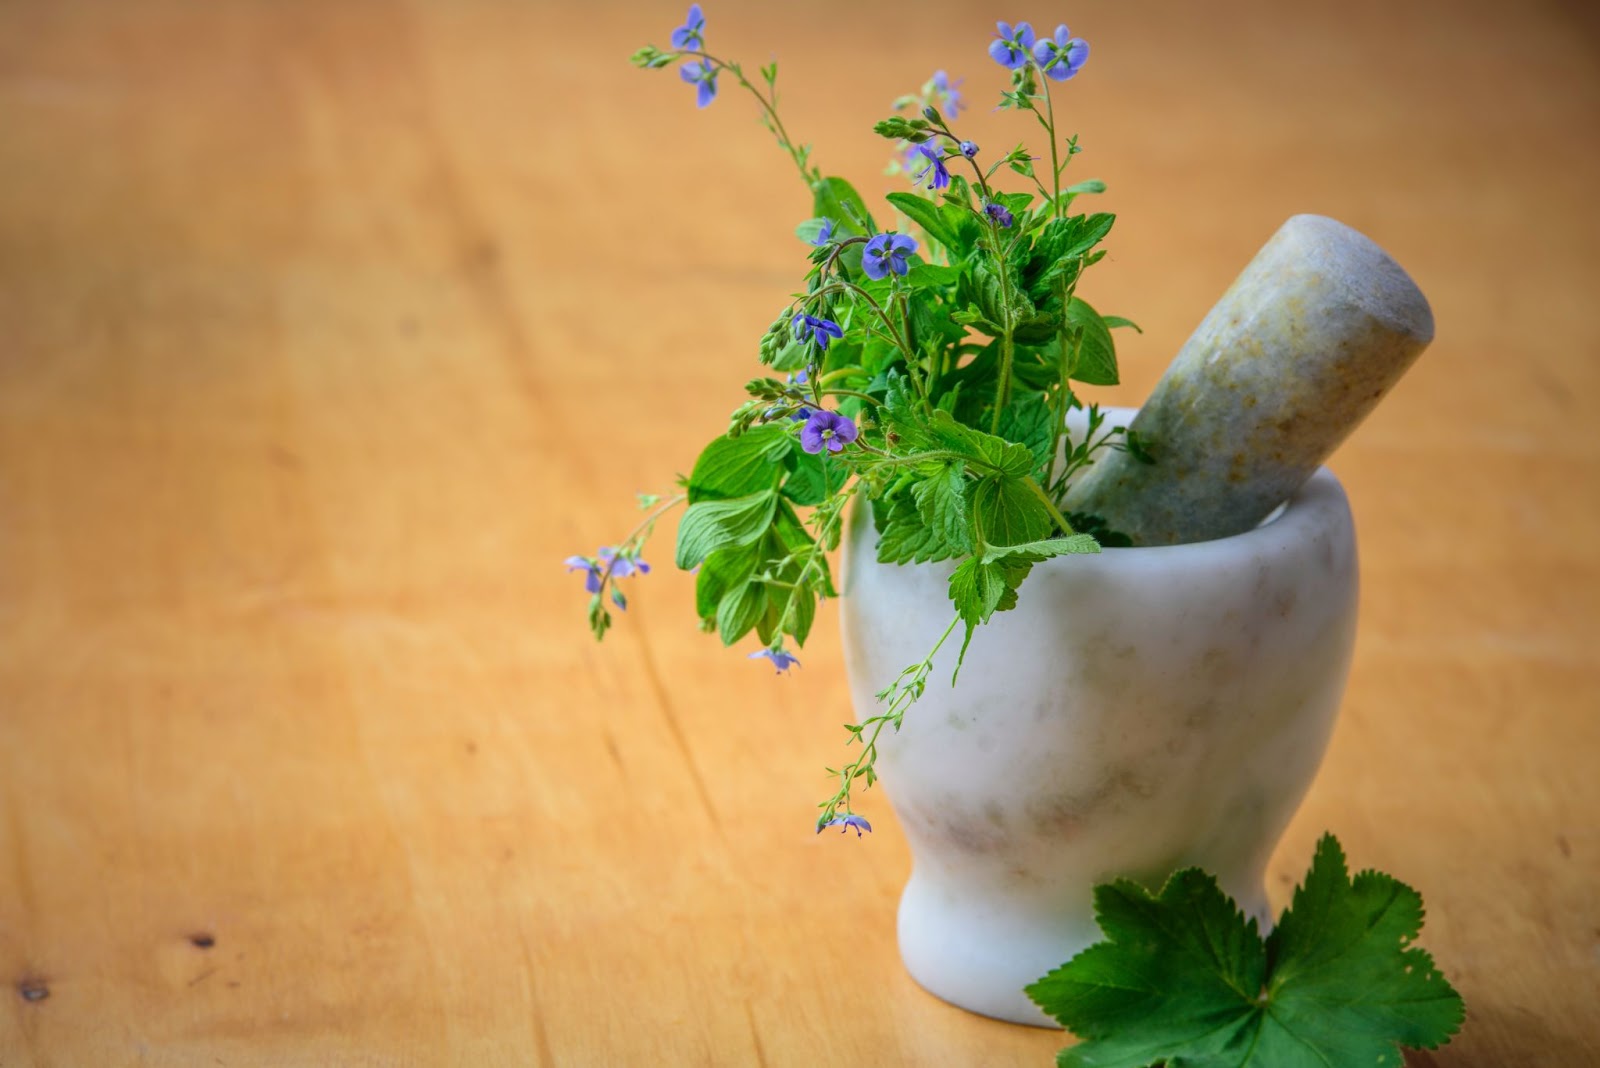 Herbal medicine inside the pot